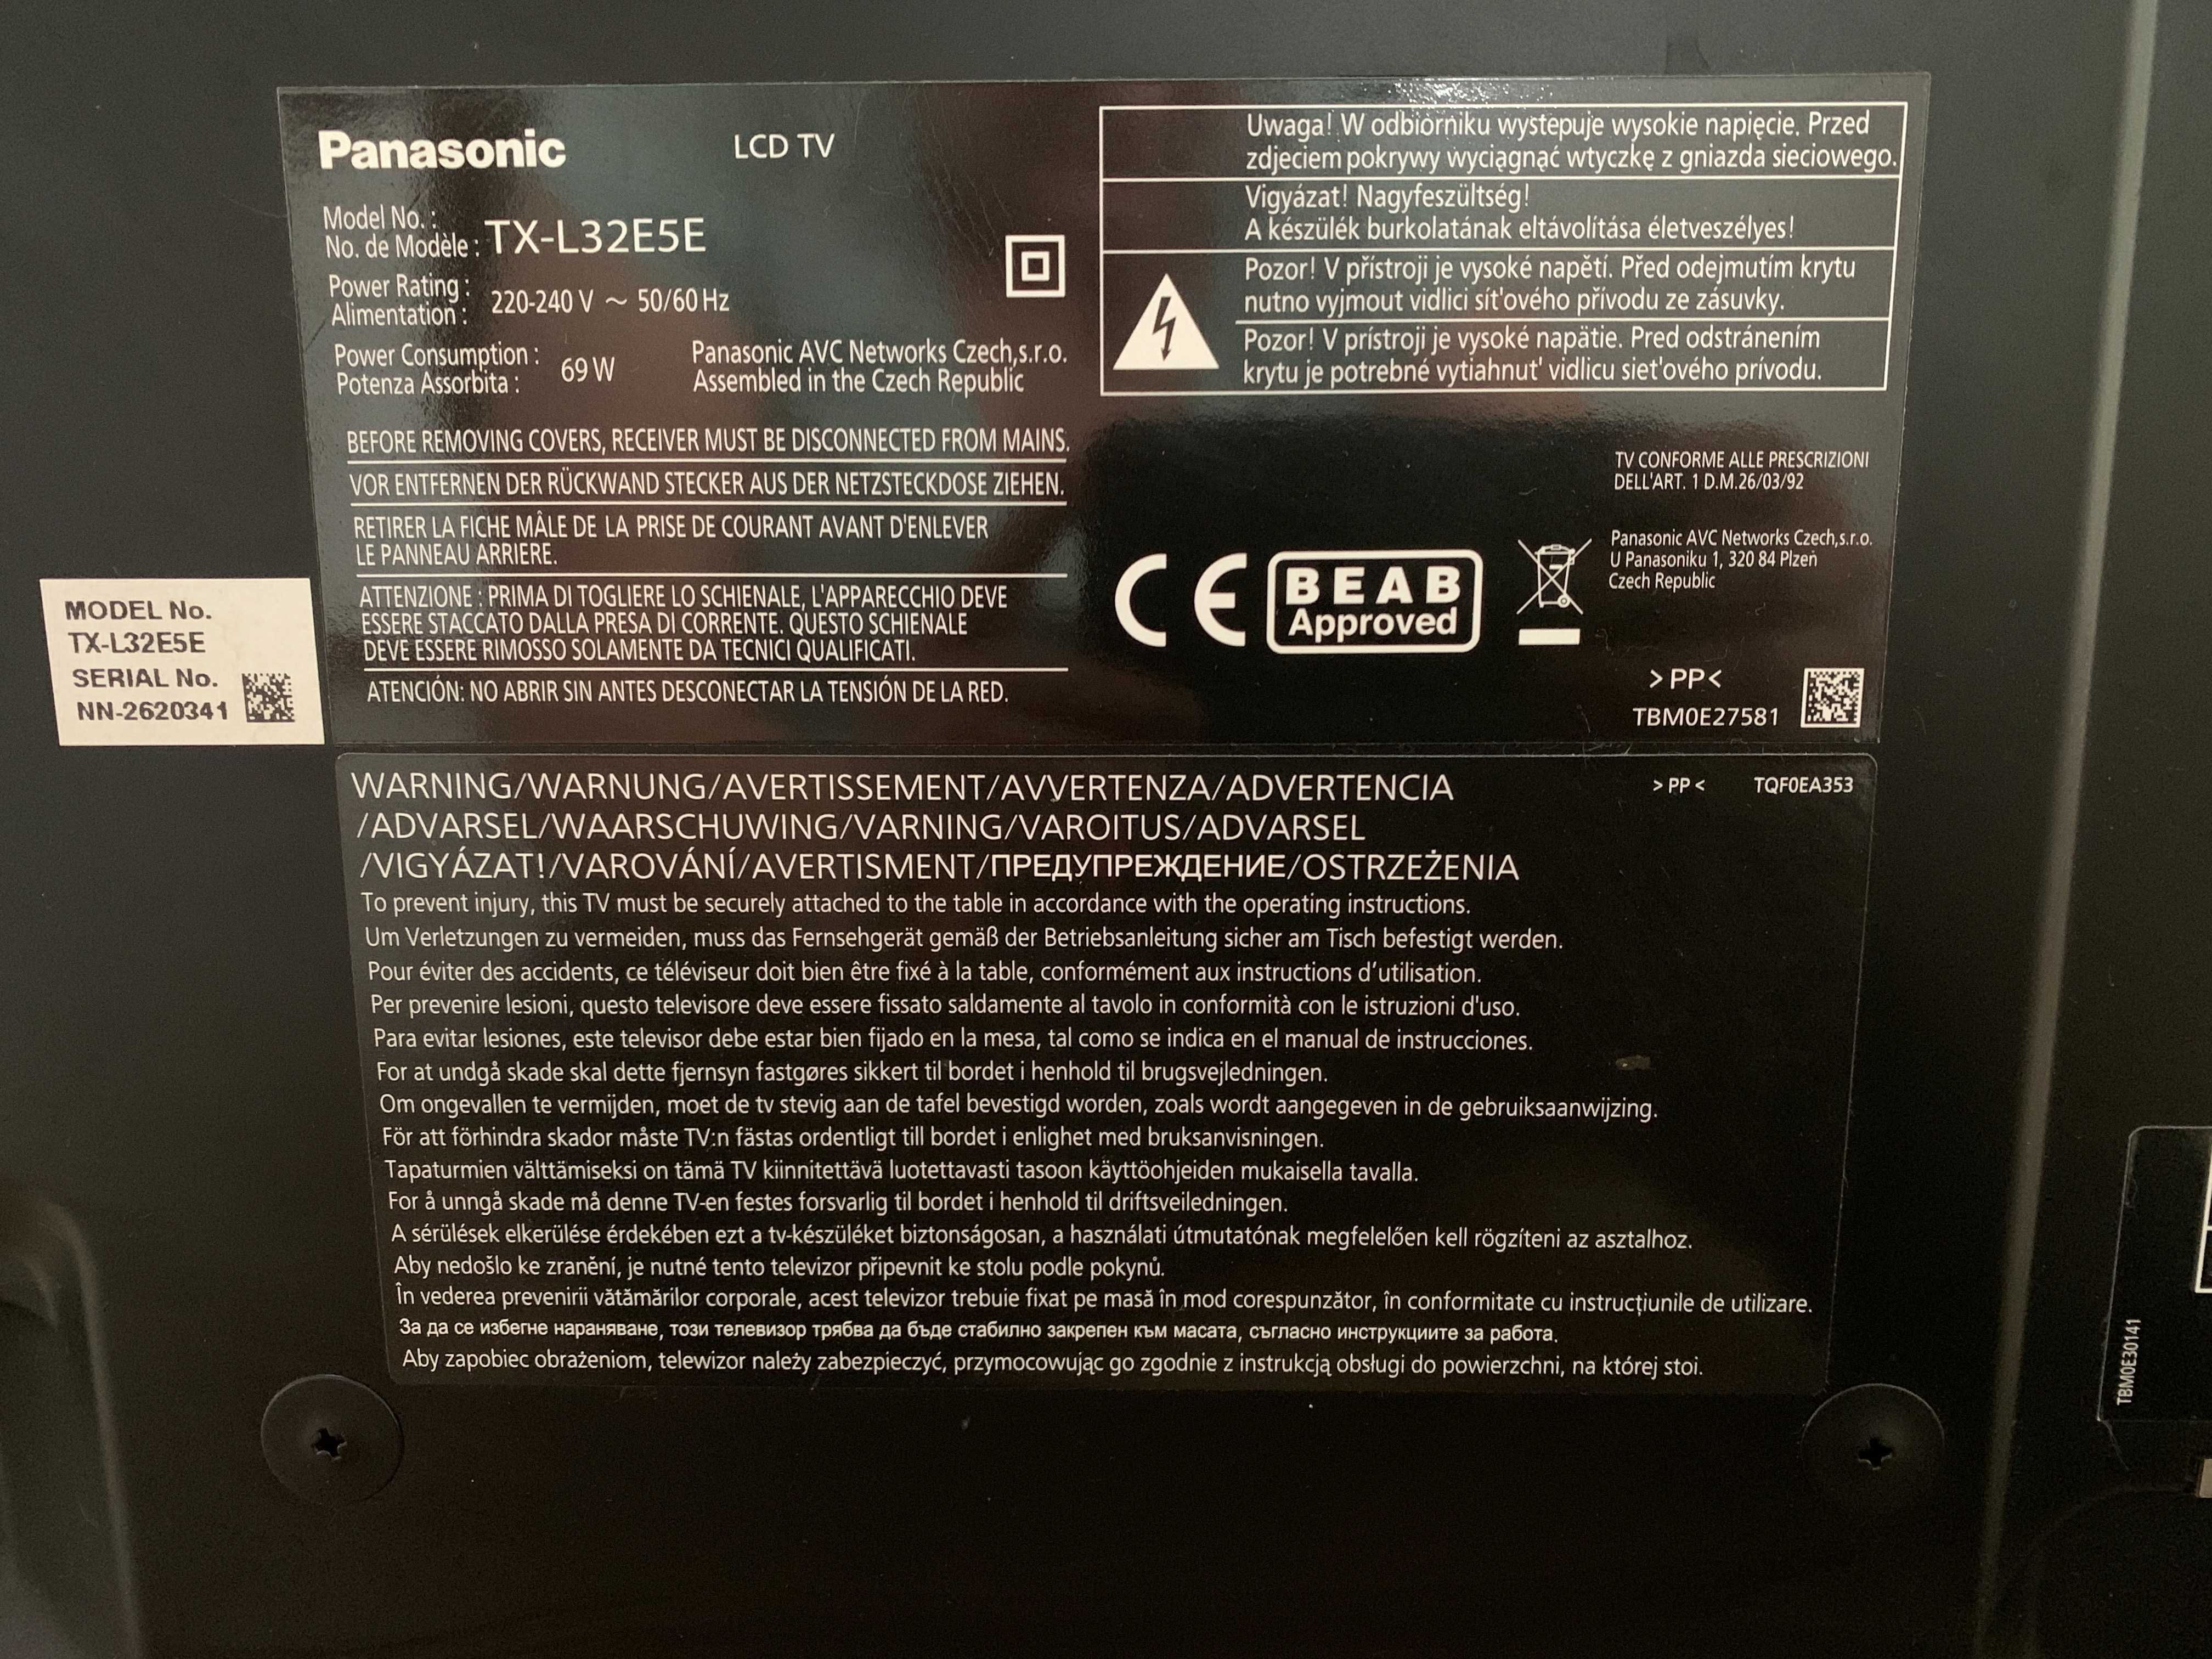 Vanzare Tv LCD Panasonic TX-L32E5E, Full HD, diagonala 80 cm